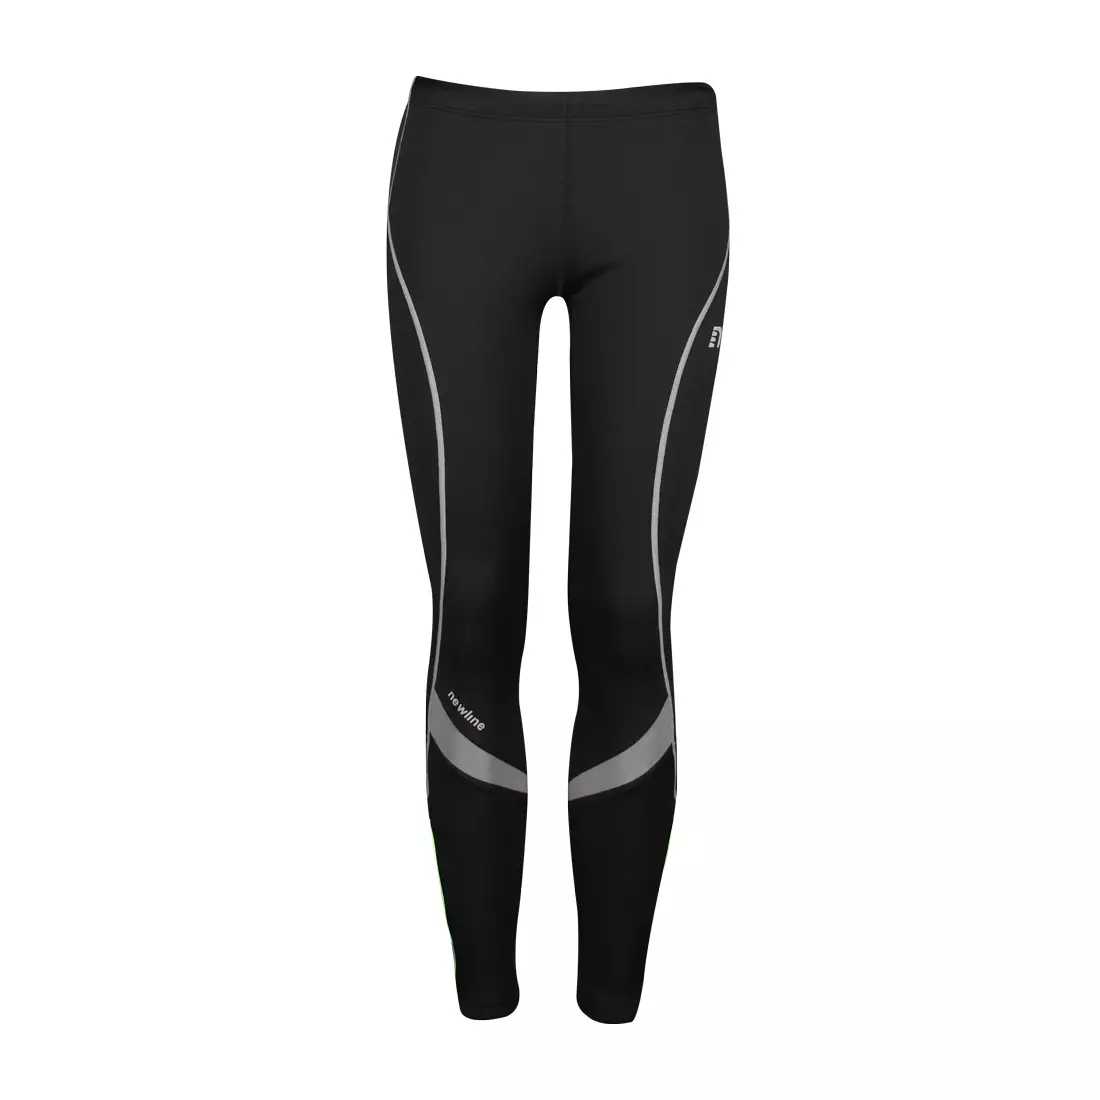 NEWLINE VISIO TIGHTS 14116-060 - men's running pants - color: Black-fluor